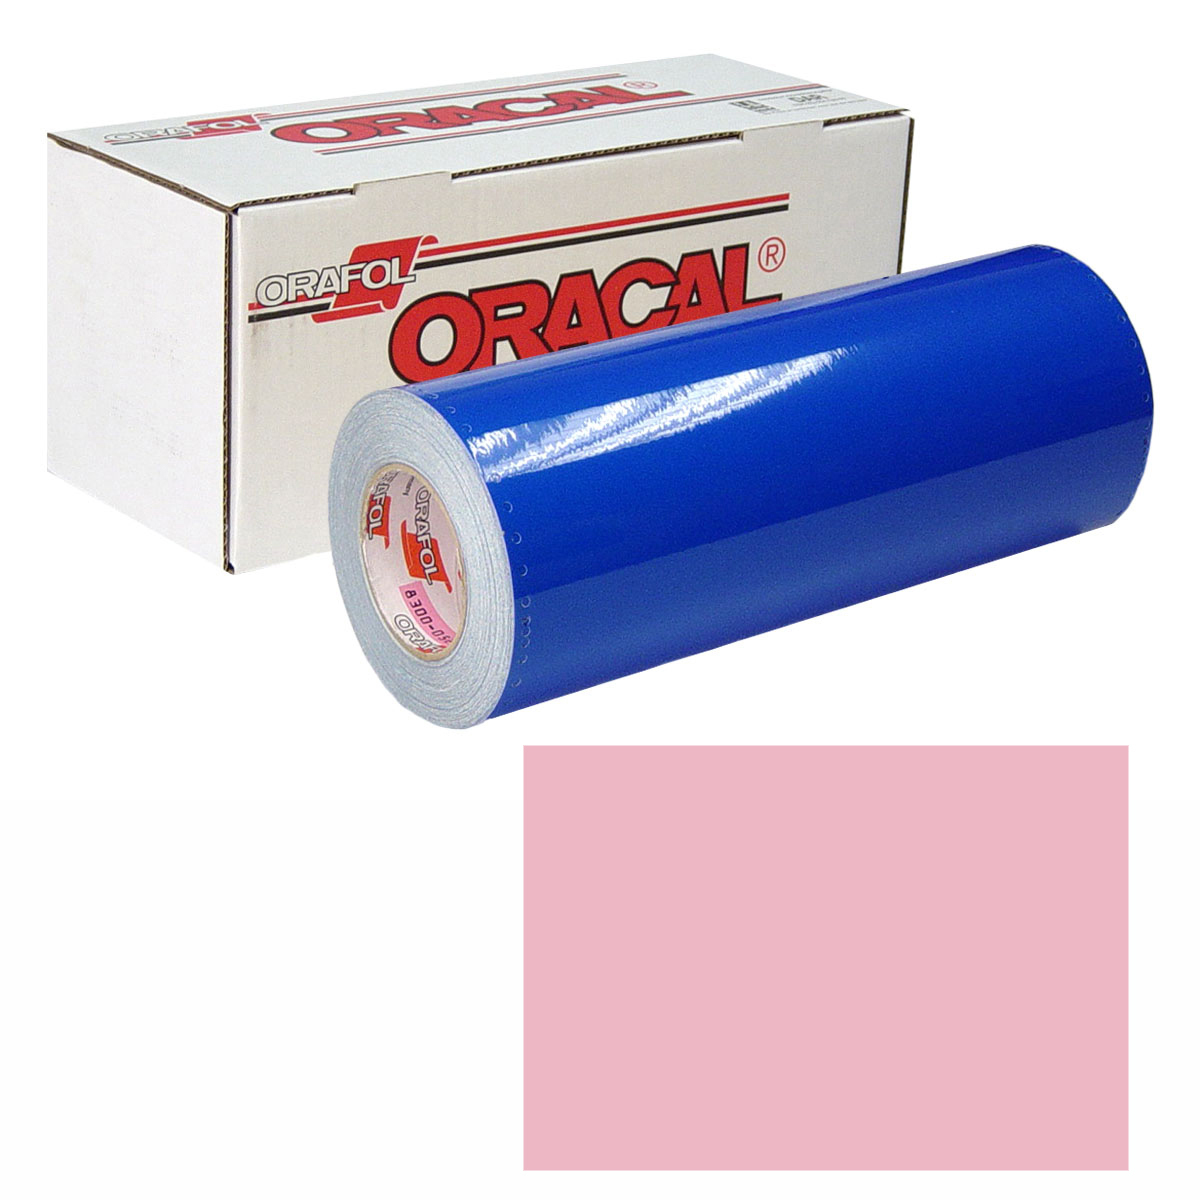 ORACAL 631 30in X 50yd 429 Carnation Pink